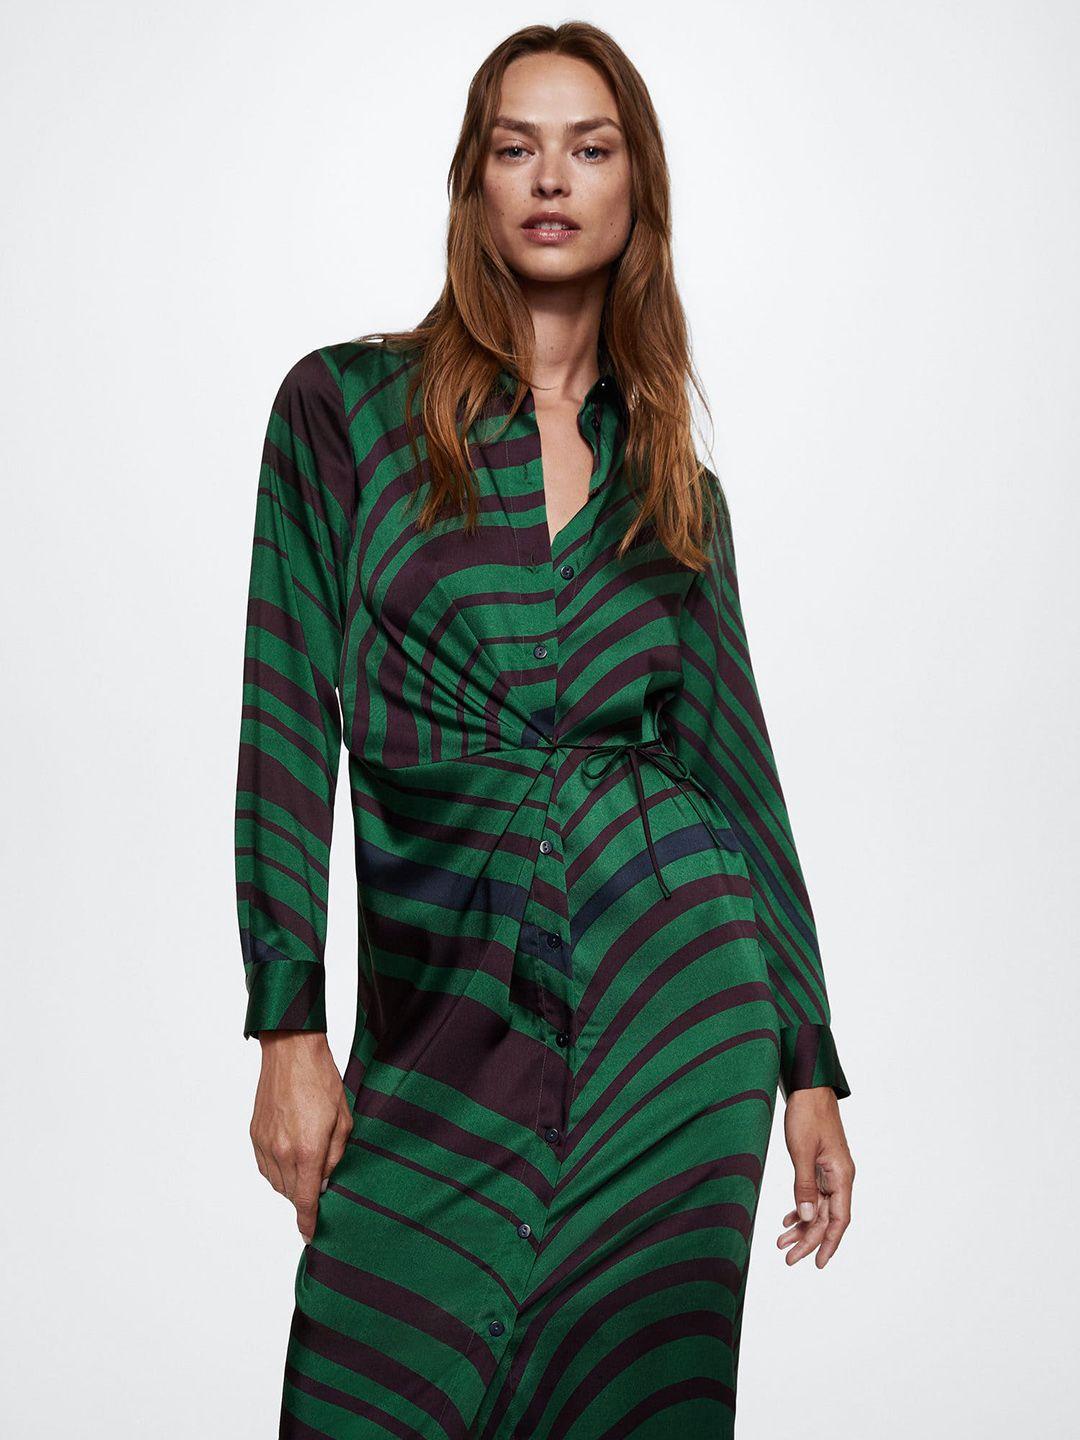 mango green & black striped satin shirt style sustainable midi dress